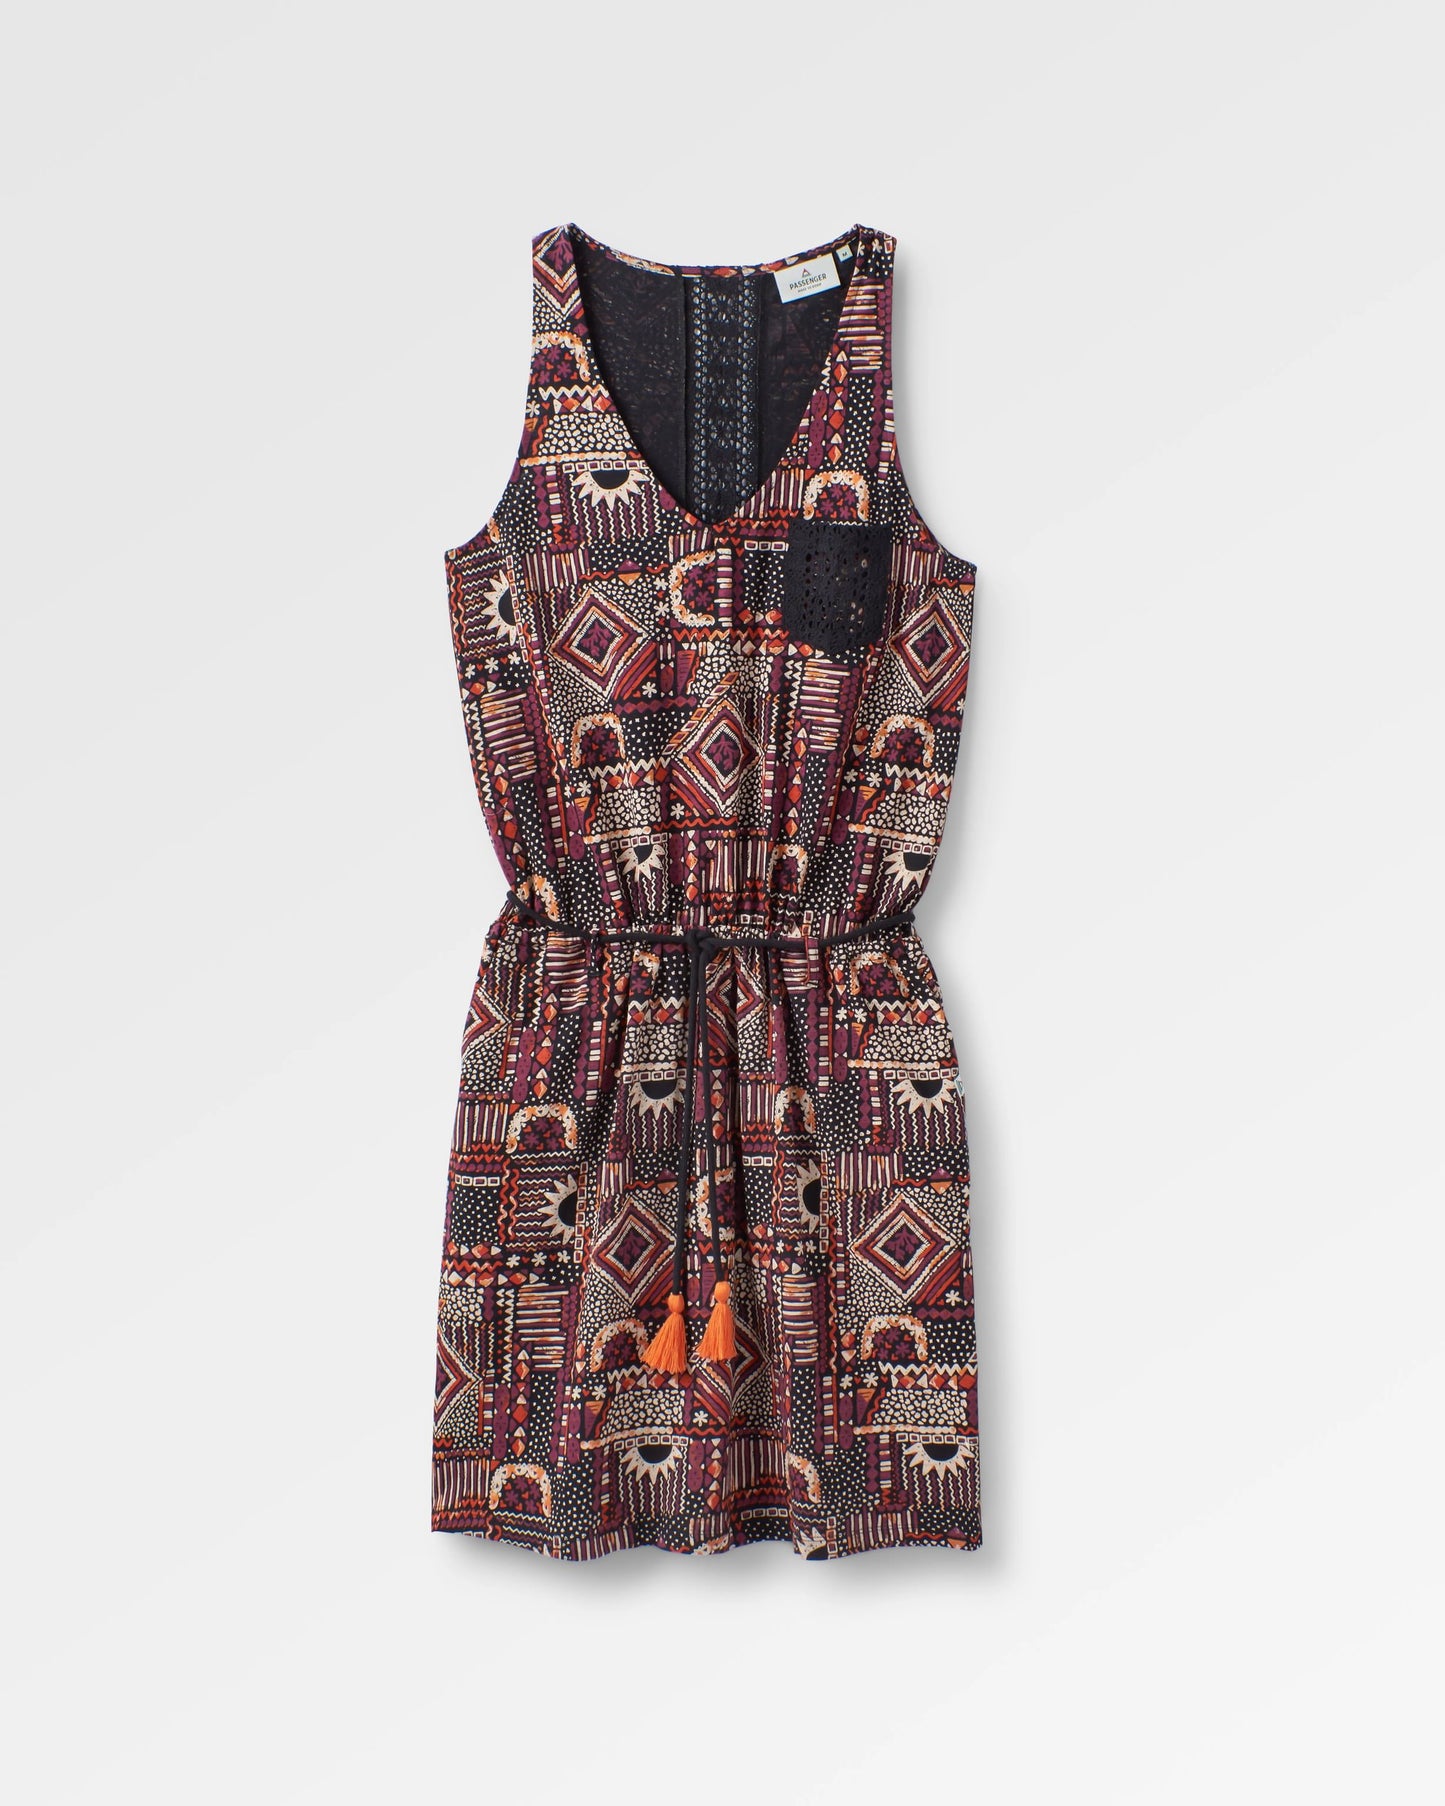 Rivergate Recycled Cotton Dress - Vintage Patchwork Black/Multi